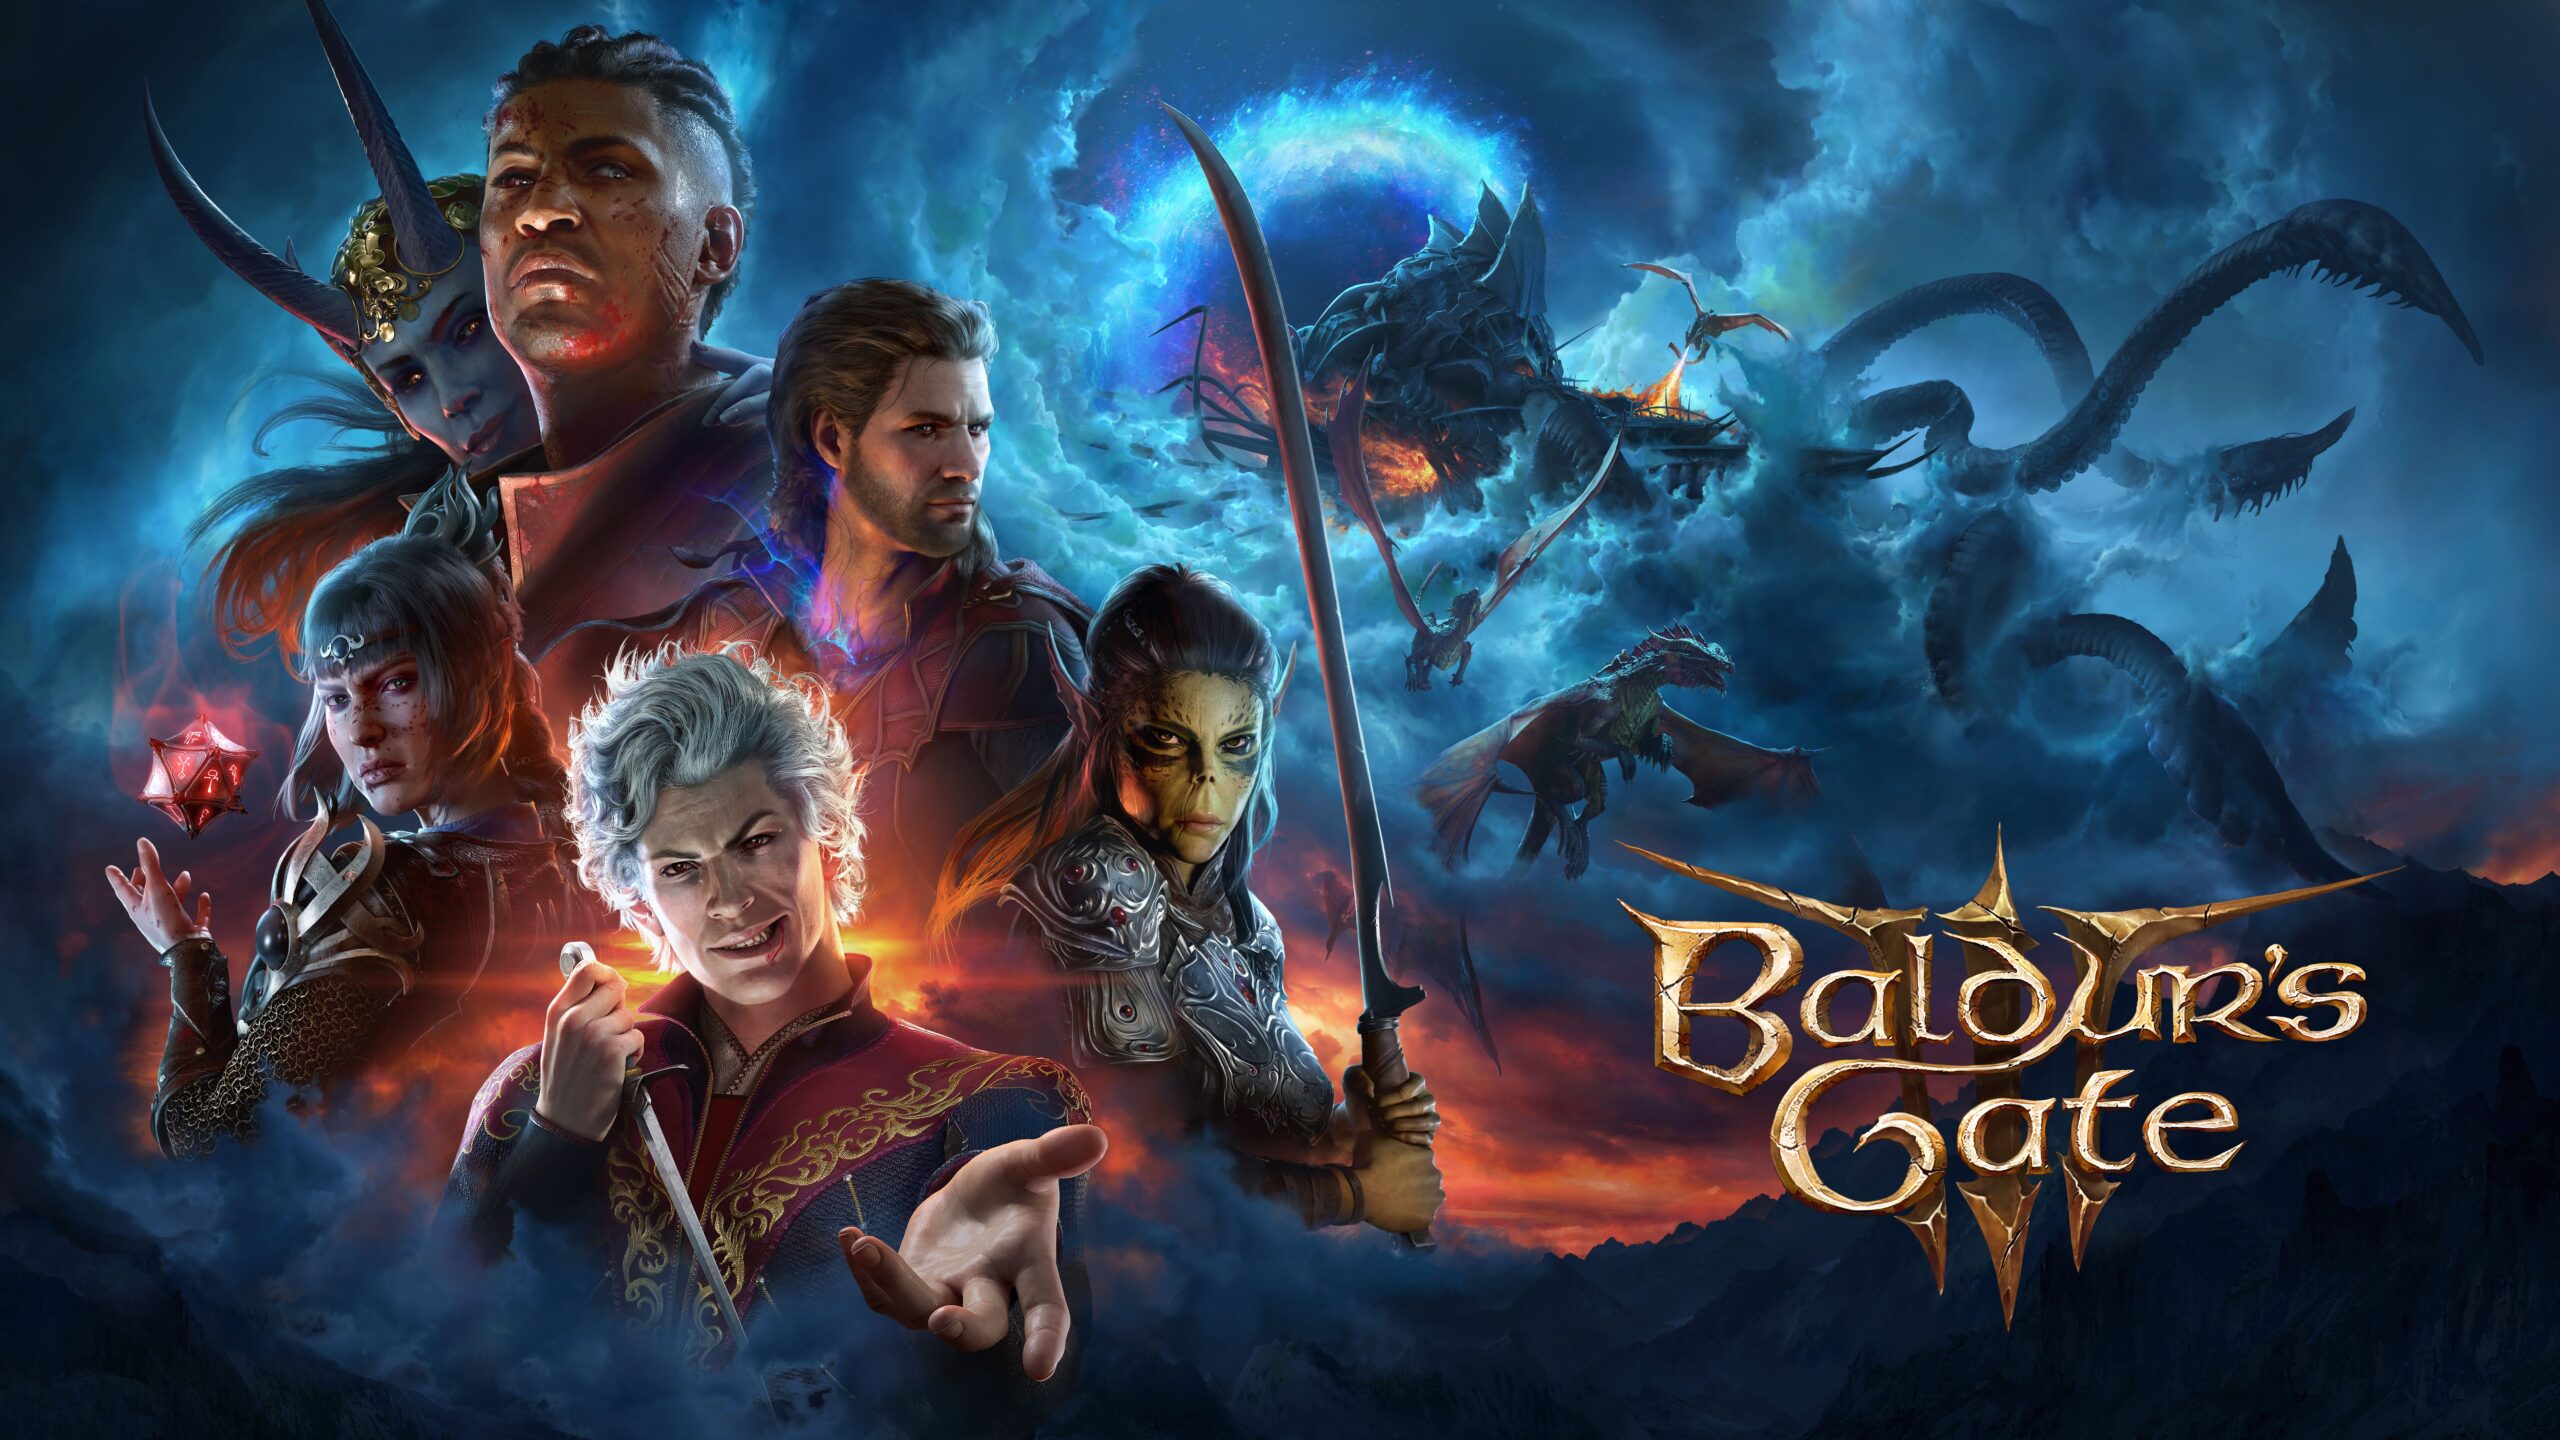 Baldur's Gate 3 key art featuring the companion characters